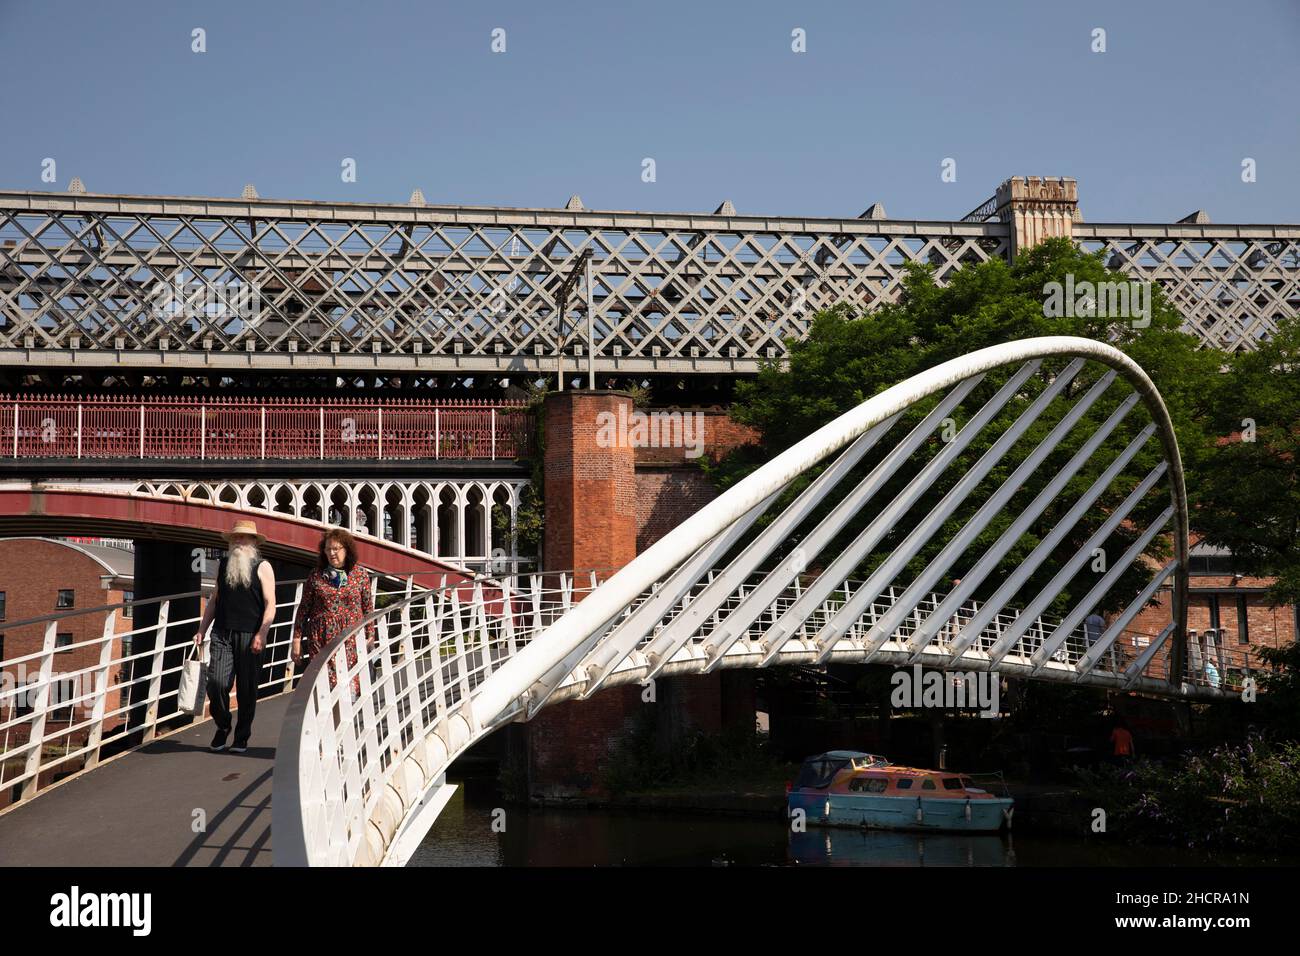 UK, England, Manchester, Castlefield, Merchant’s Bridge crossing Bridgewater Canal basin at Railway Viaduct Stock Photo